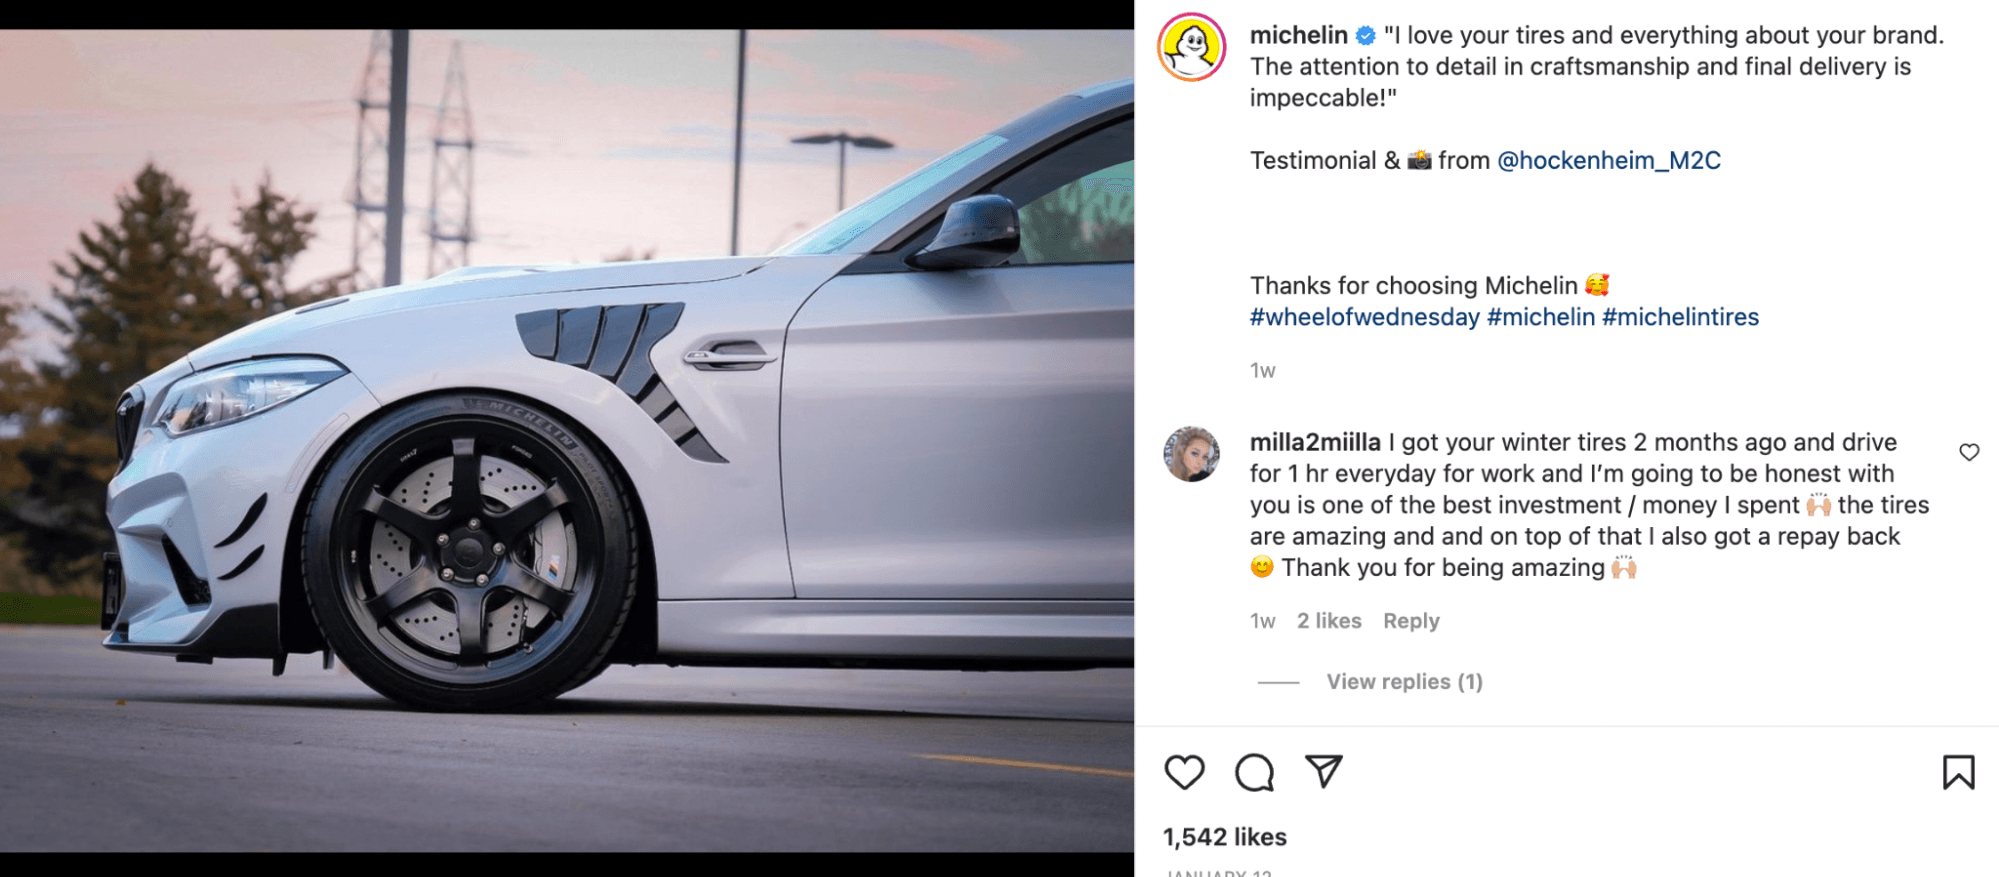 Screenshot of Michelin tires Instagram post featuring customer UGC